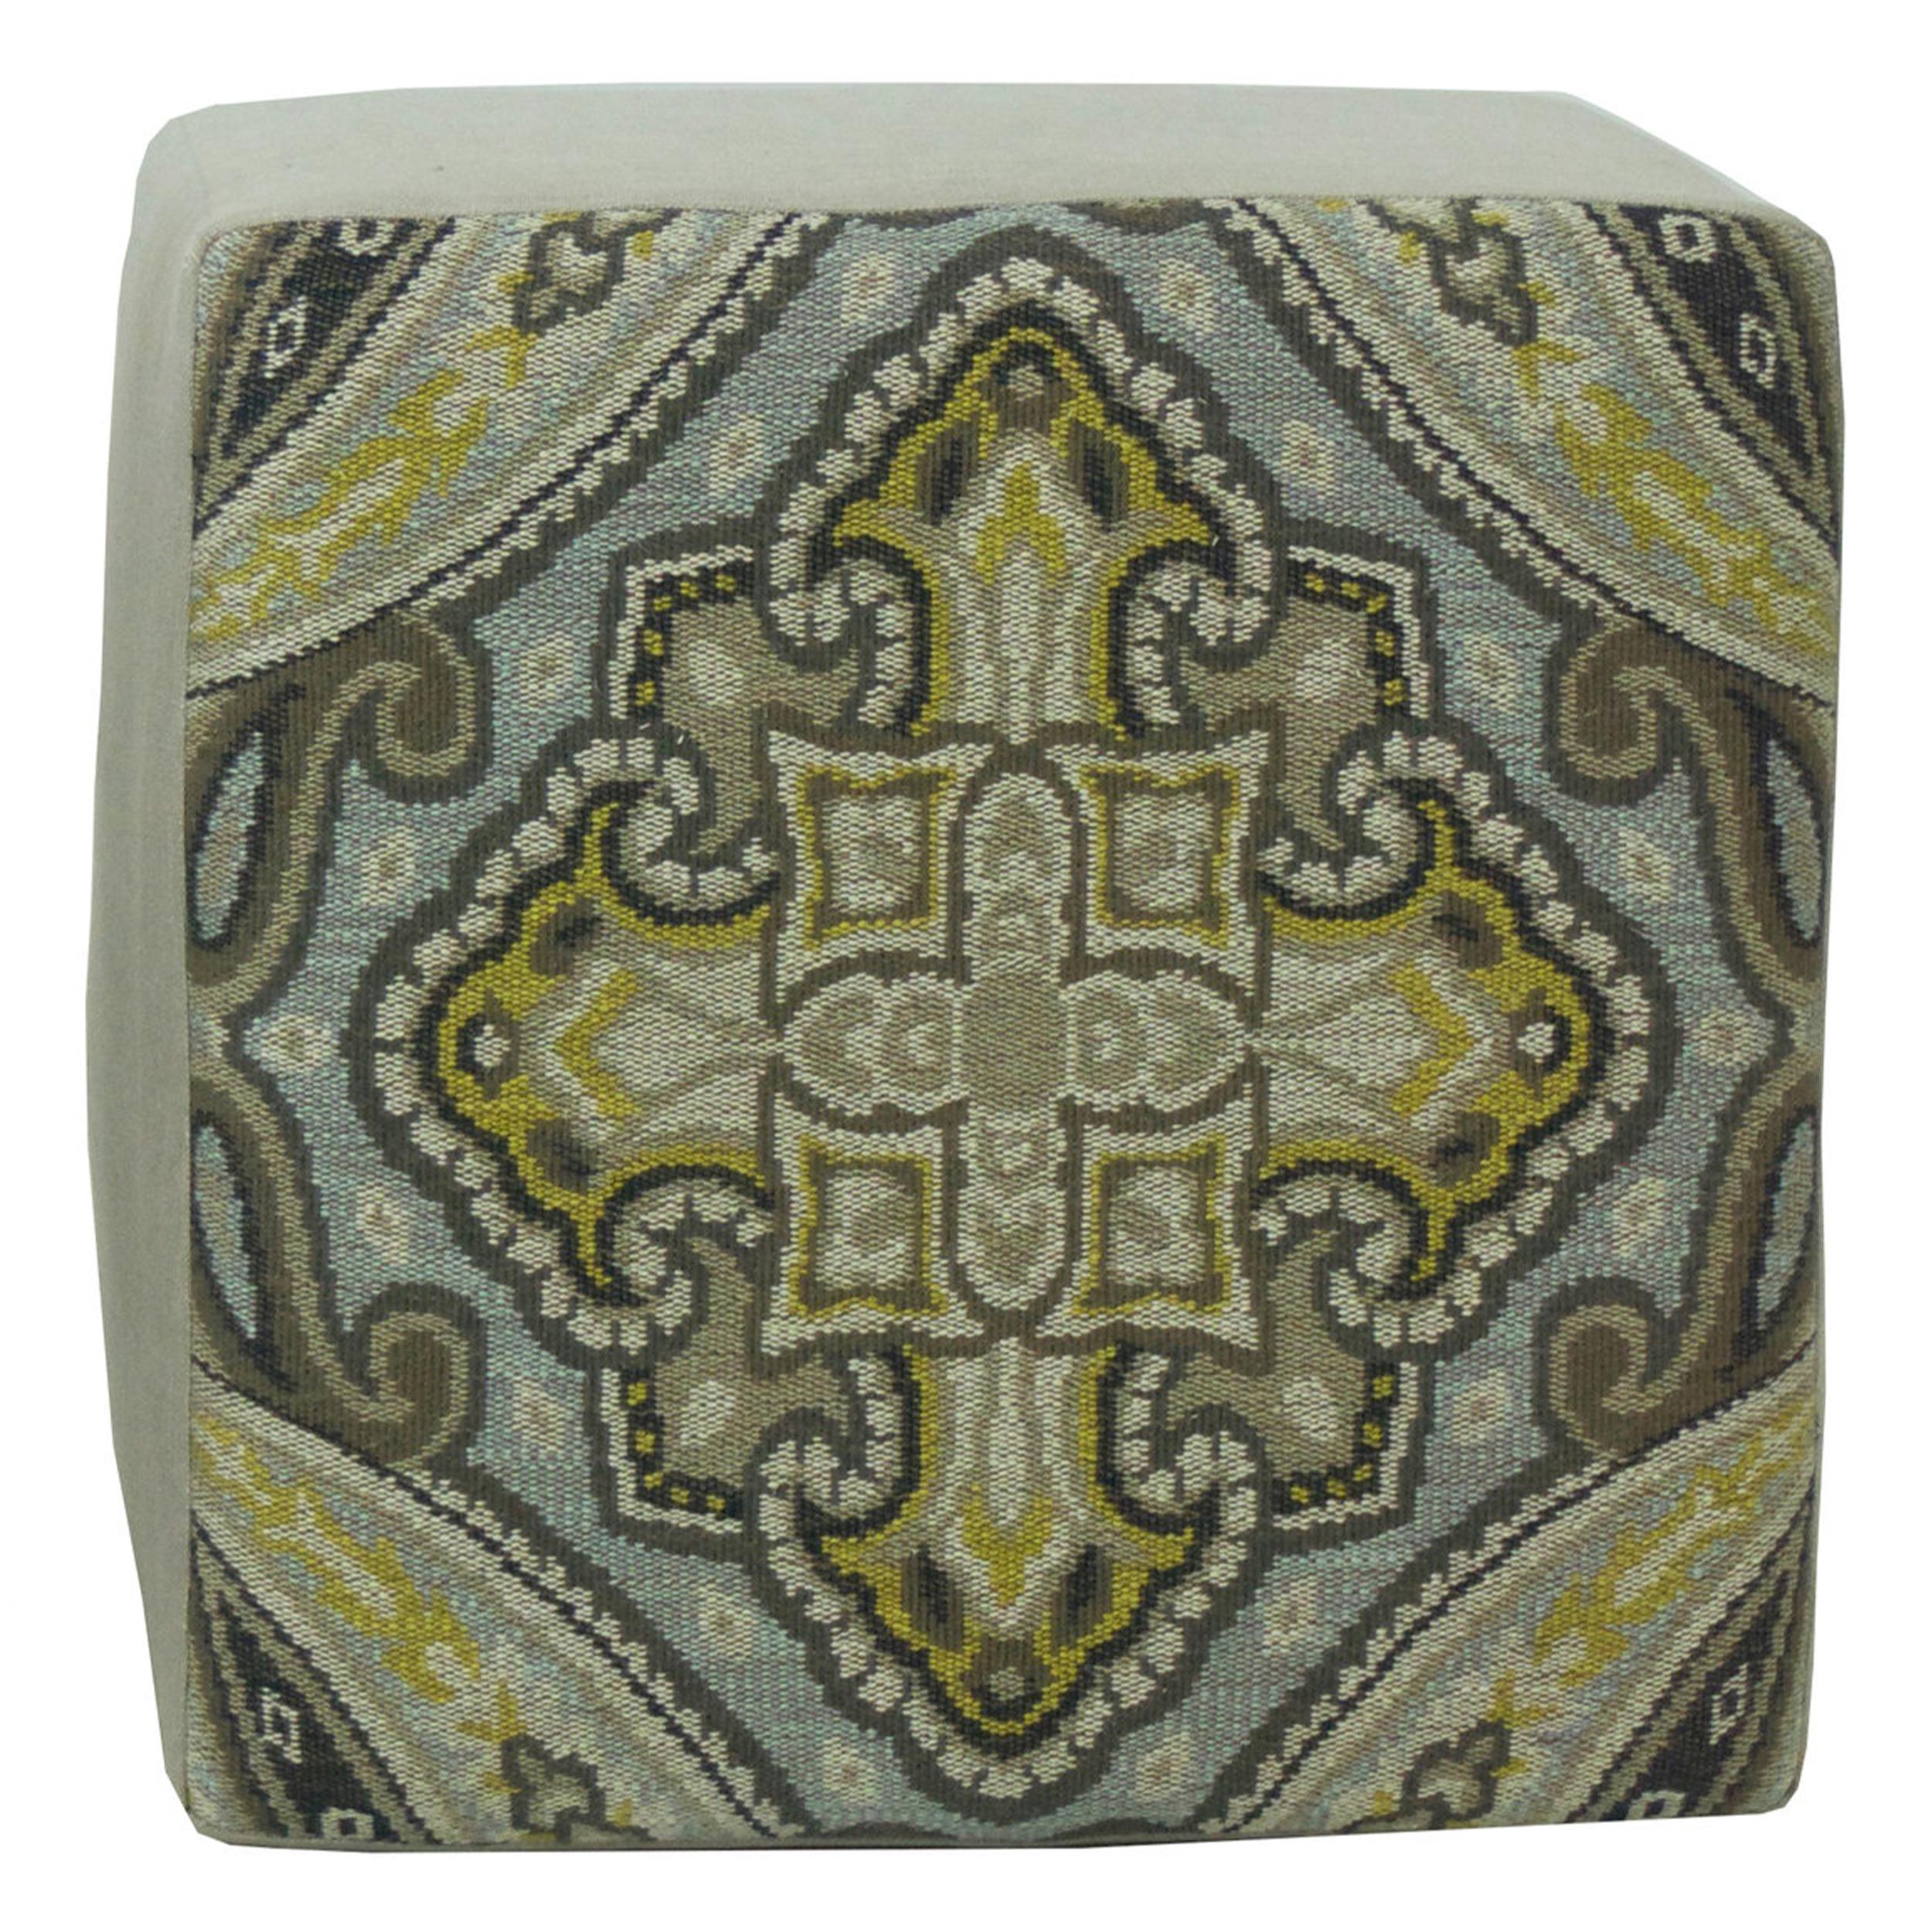 ottoman cube